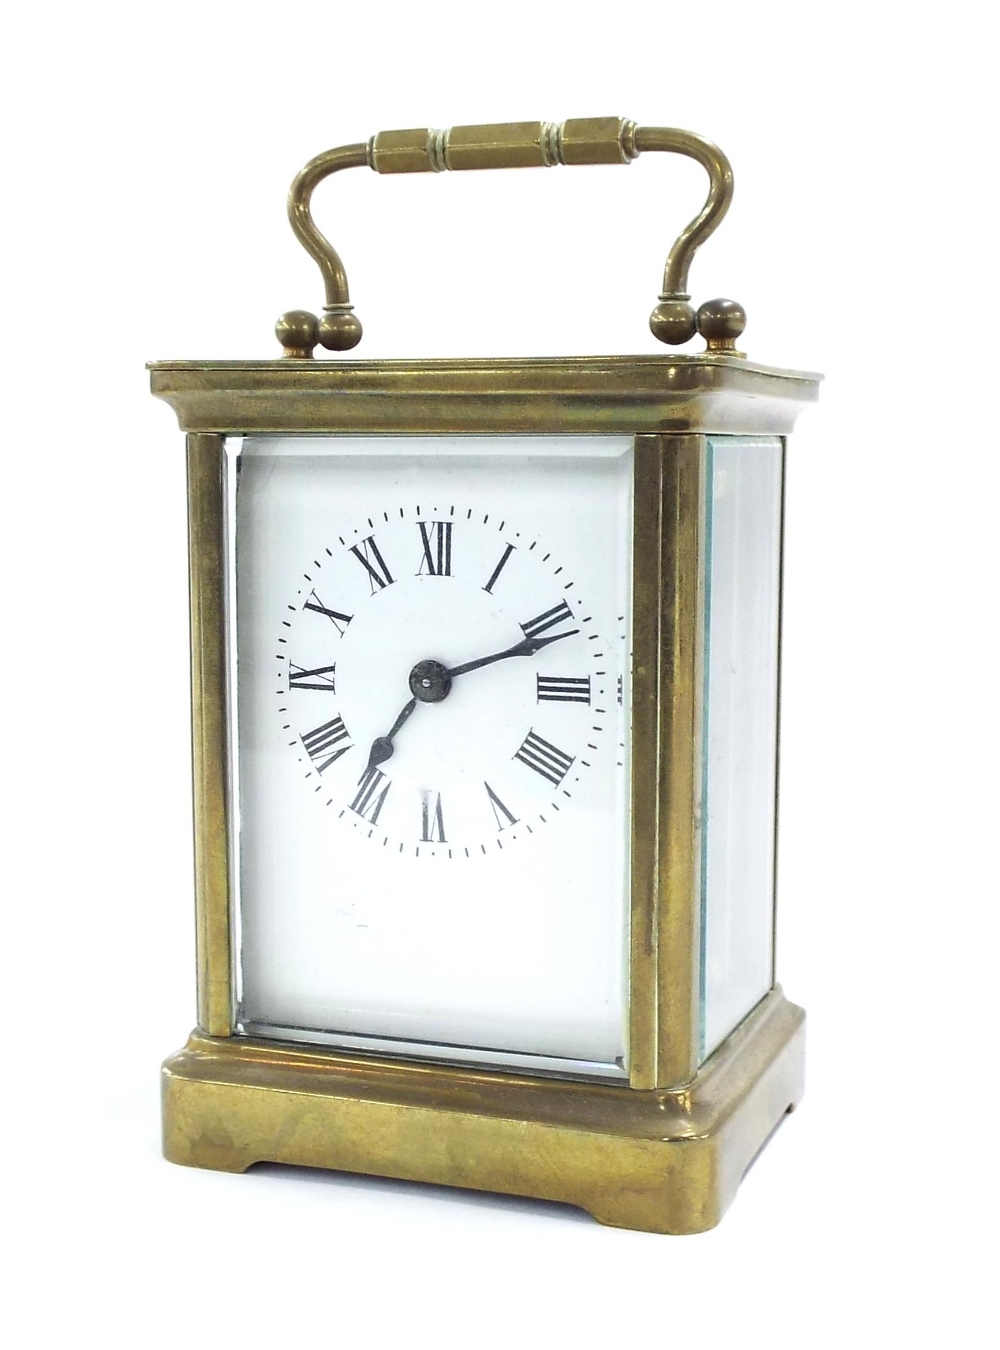 Carriage clock timepiece, within a corniche brass case, 5.5" high